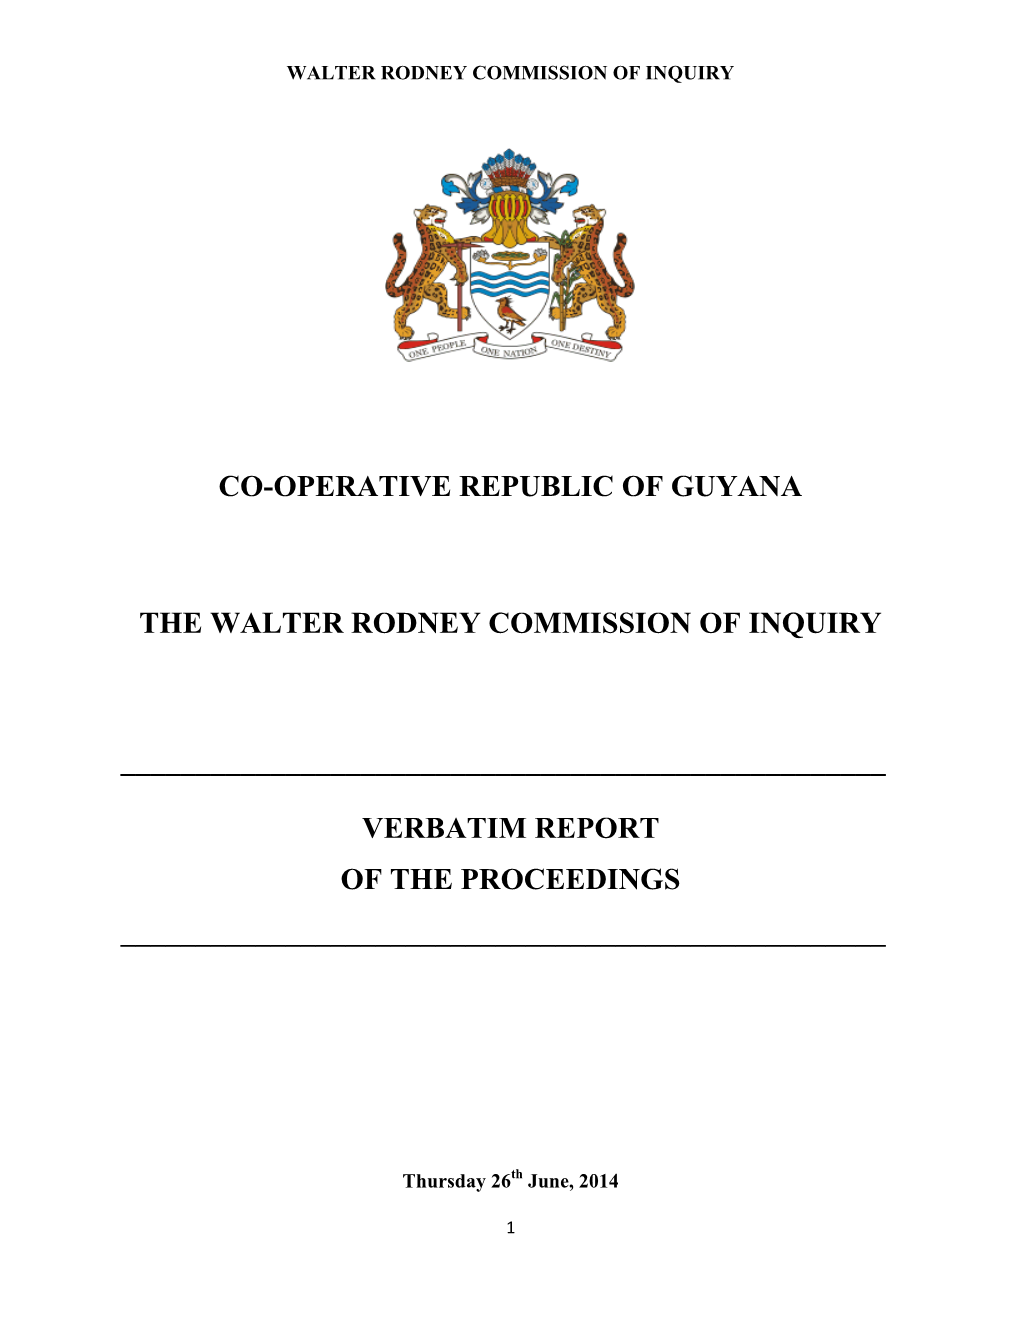 Co-Operative Republic of Guyana the Walter Rodney